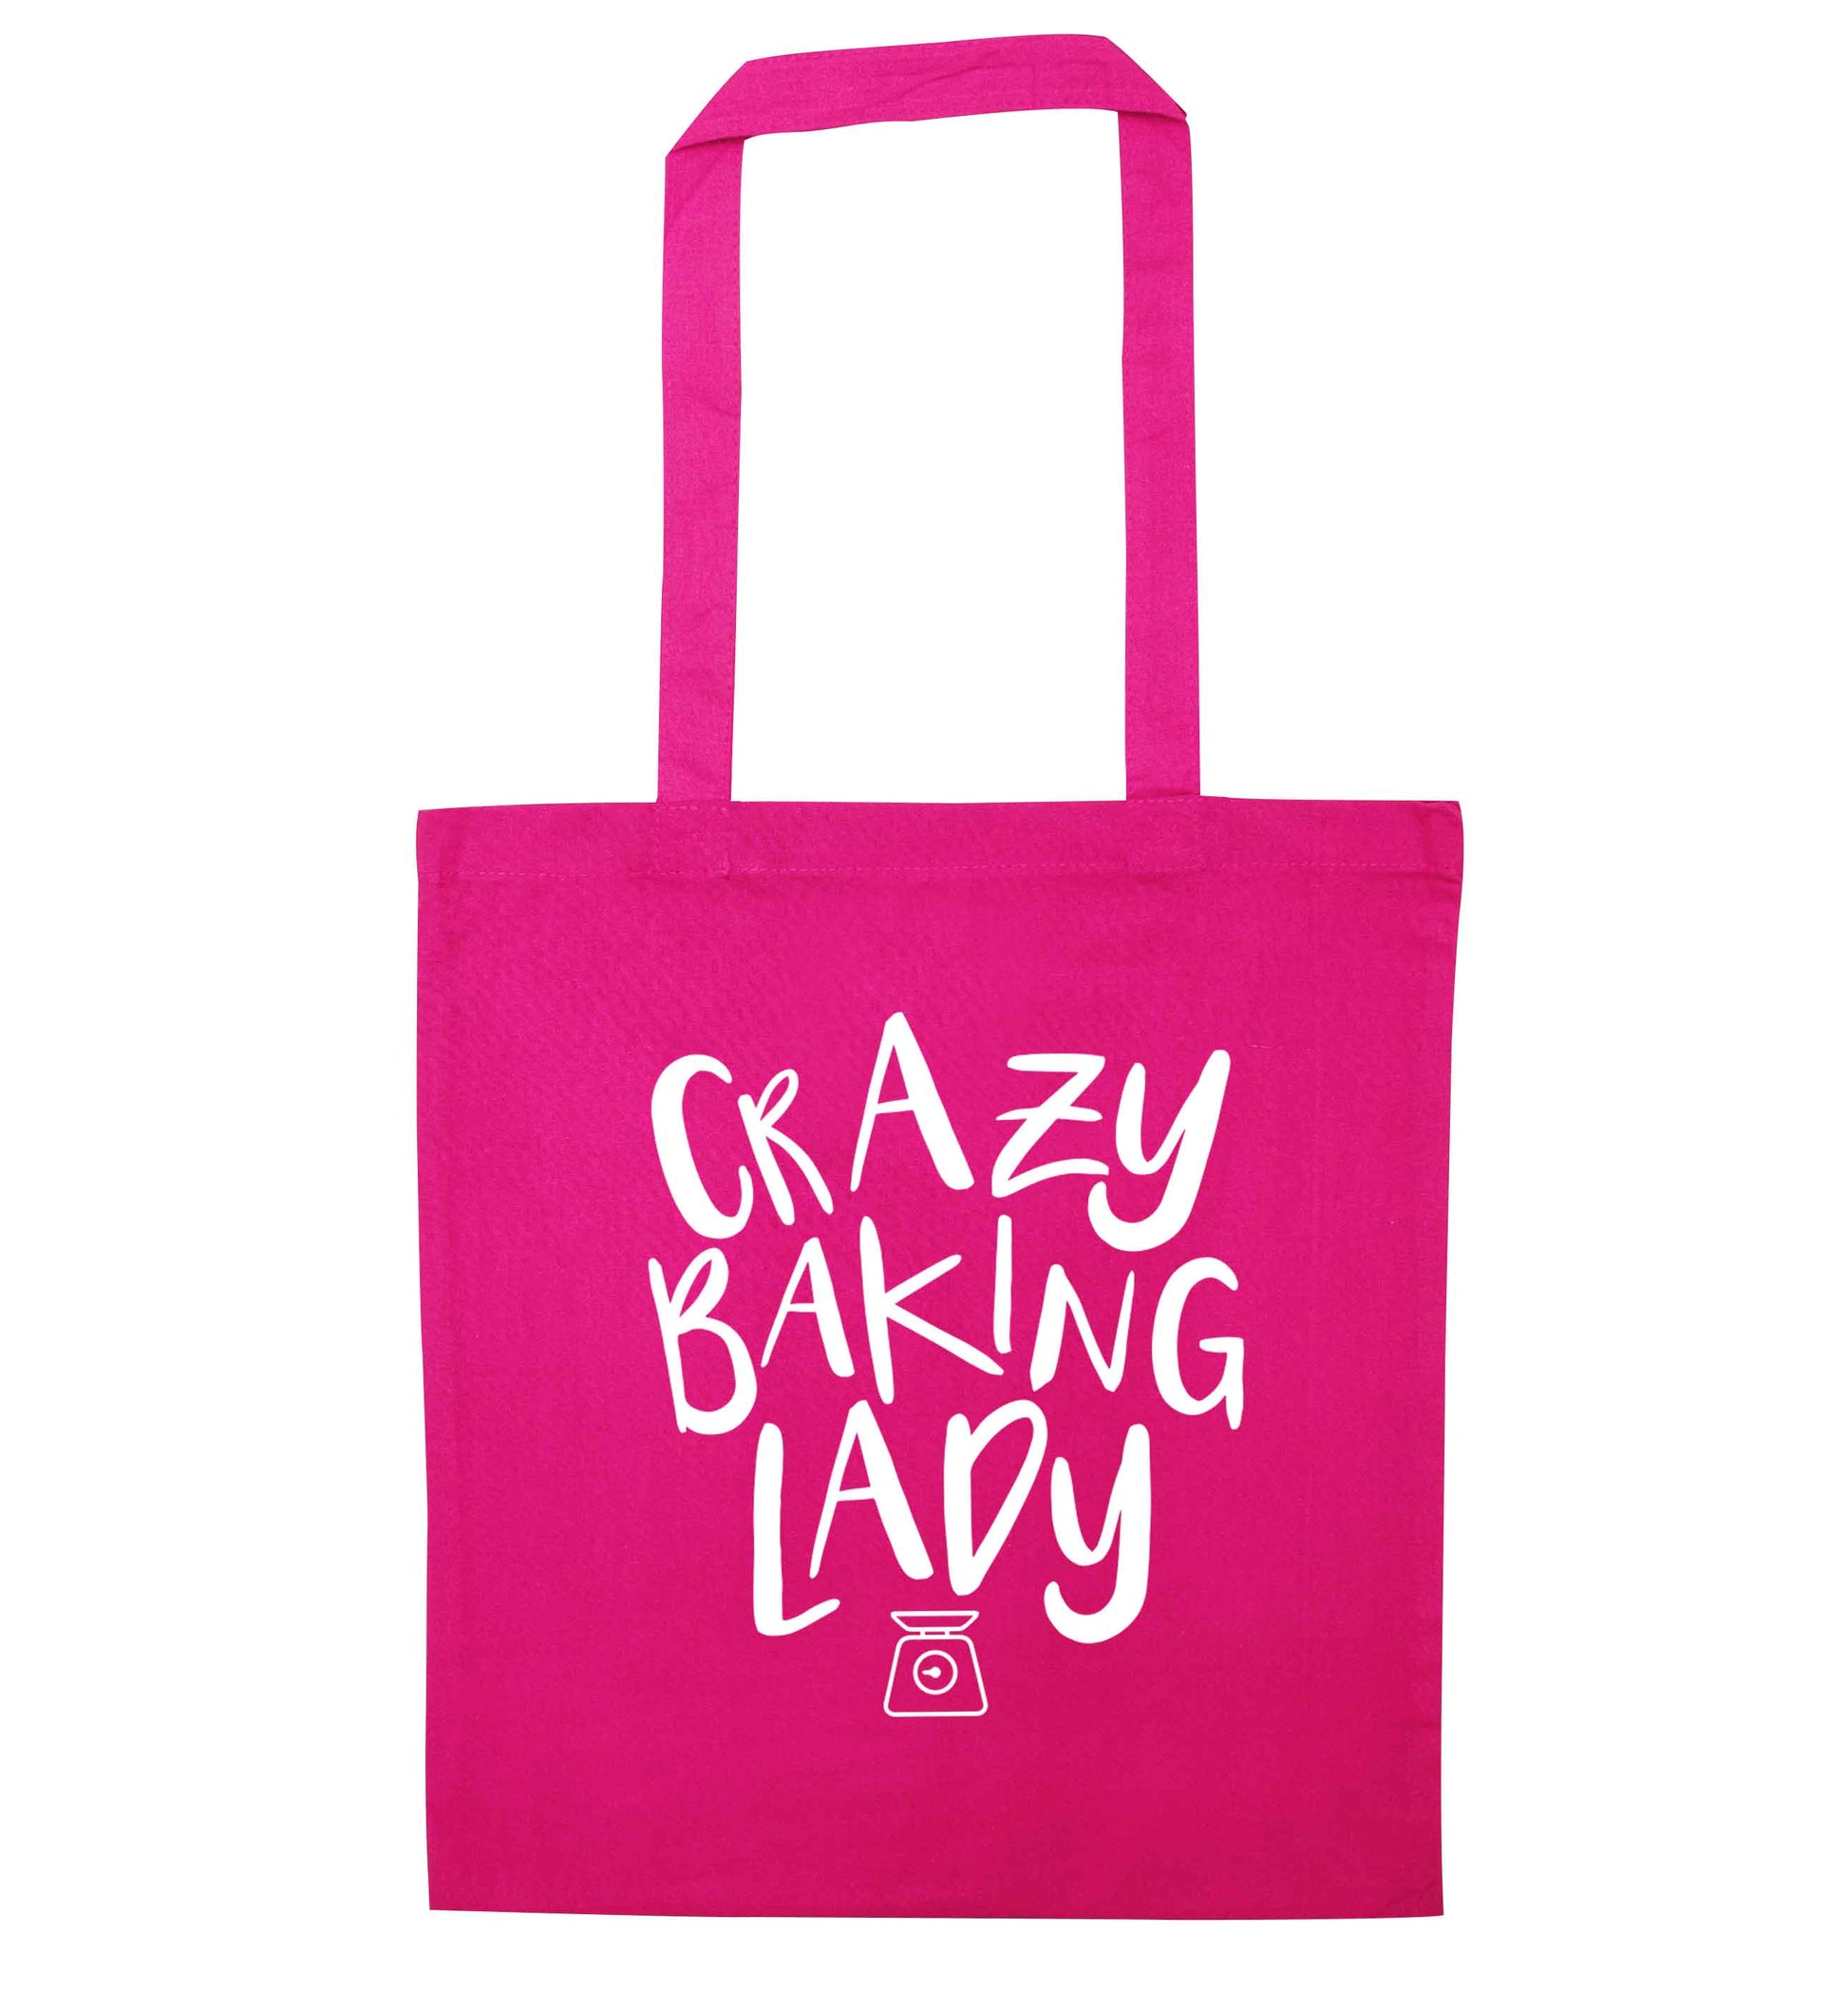 Crazy baking lady pink tote bag